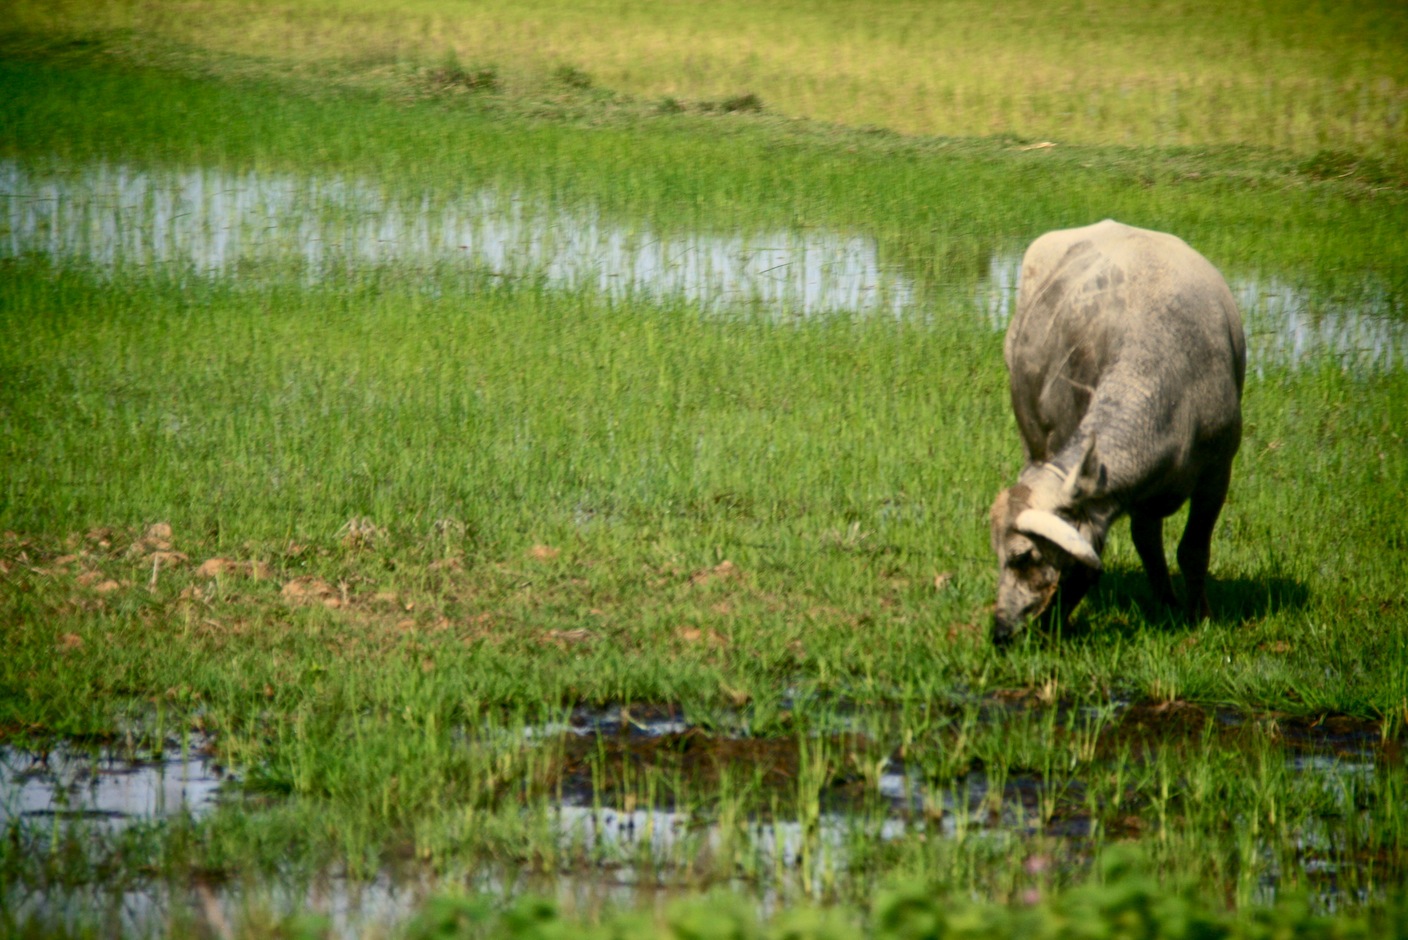 Water buffalo in Pursat province (Photo by Jenny Holligan)